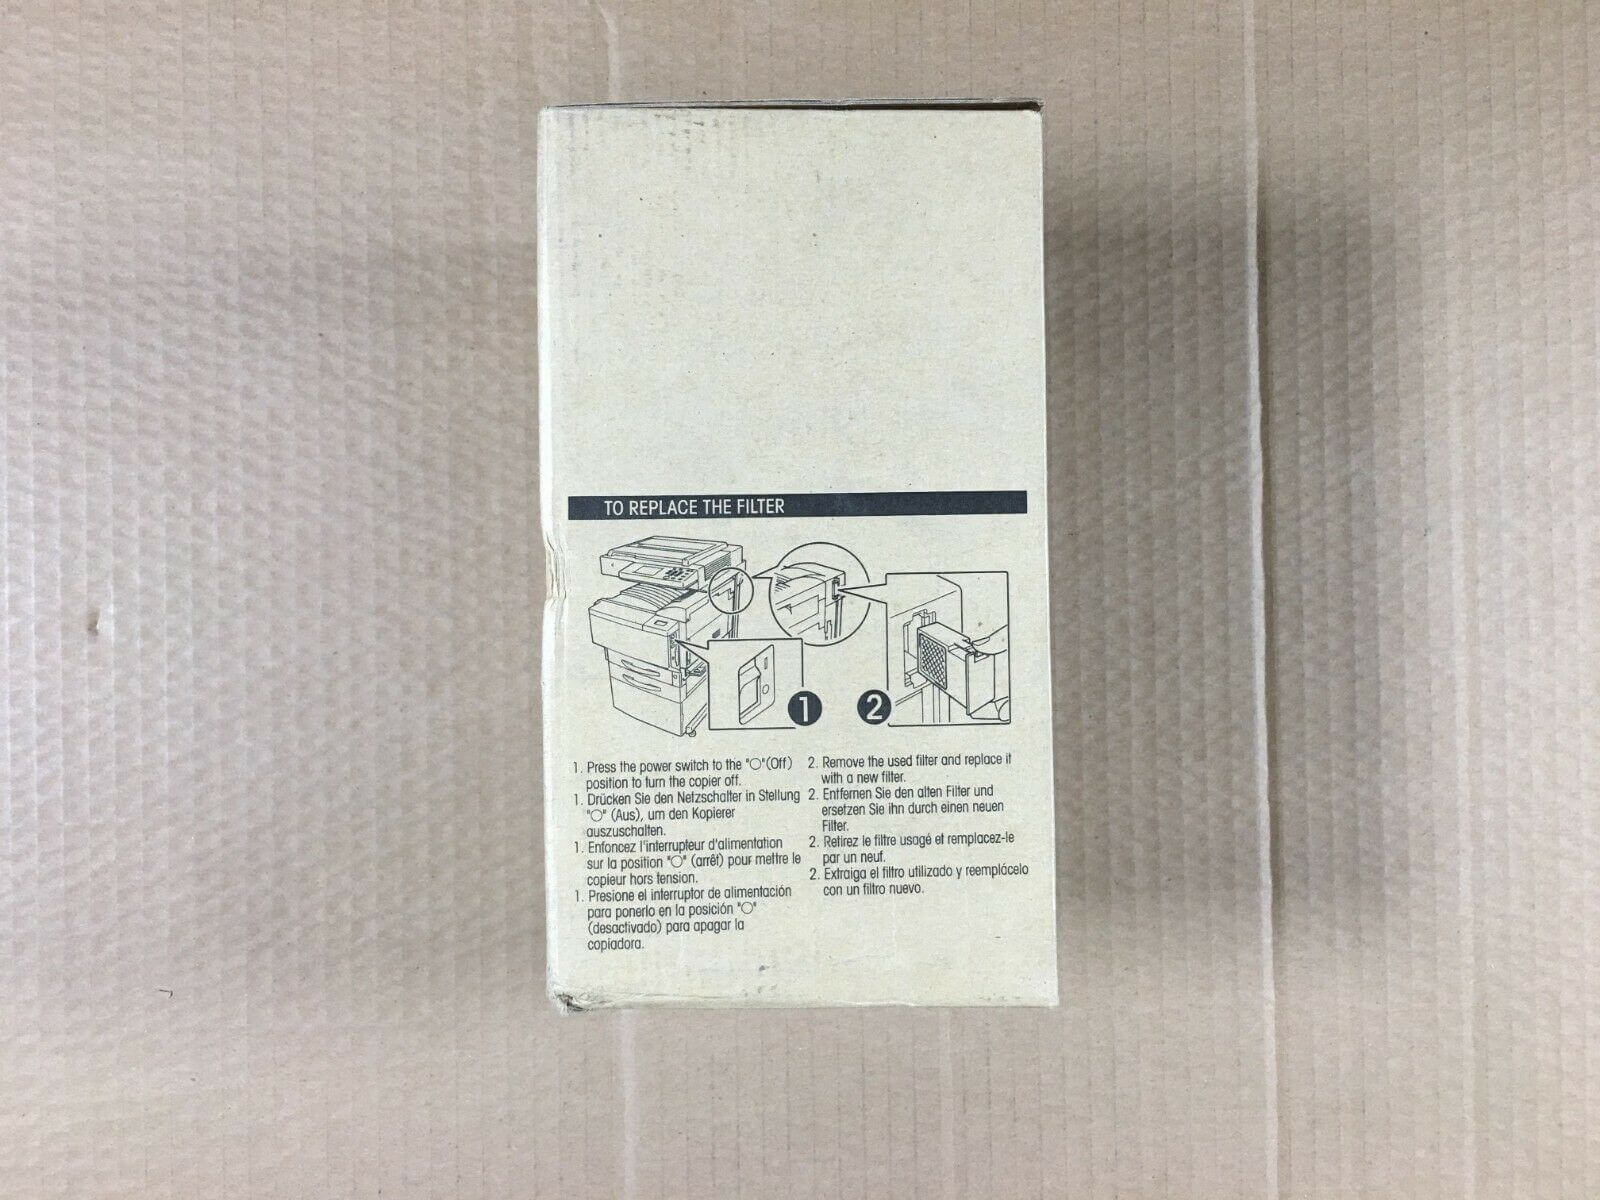 Genuine OCE 459-2 Black Toner Cartridge For cm2020 cm3120 Same Day Shipping - copier-clearance-center